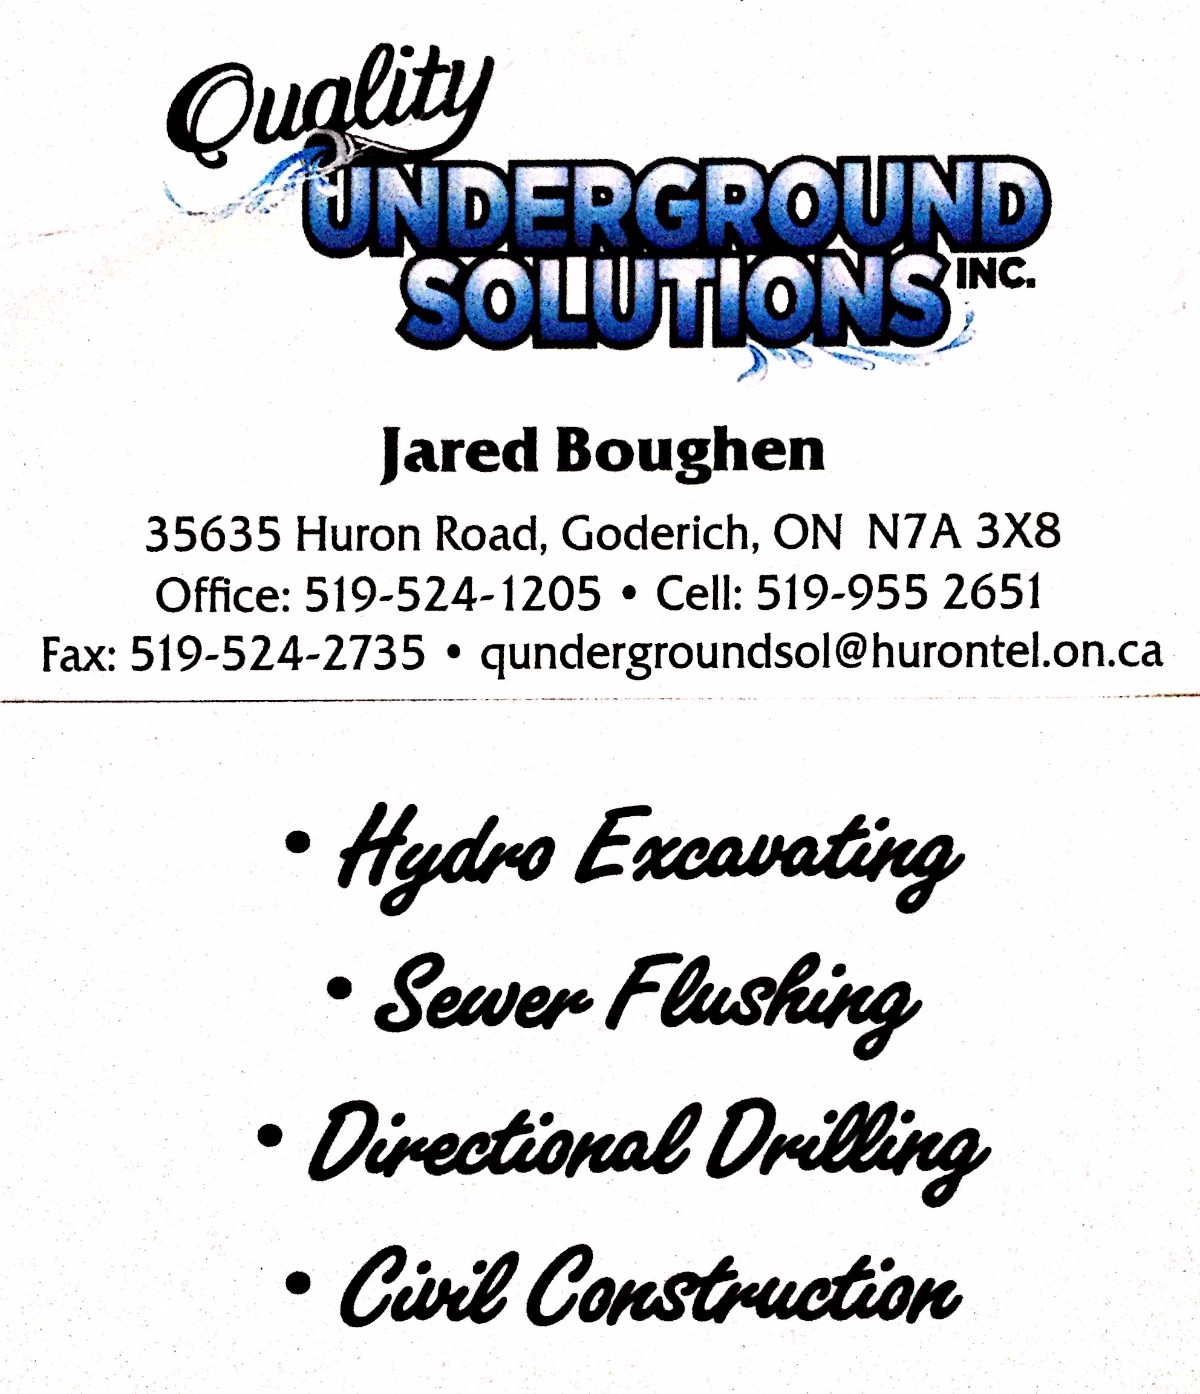 Quality Underground Solutions